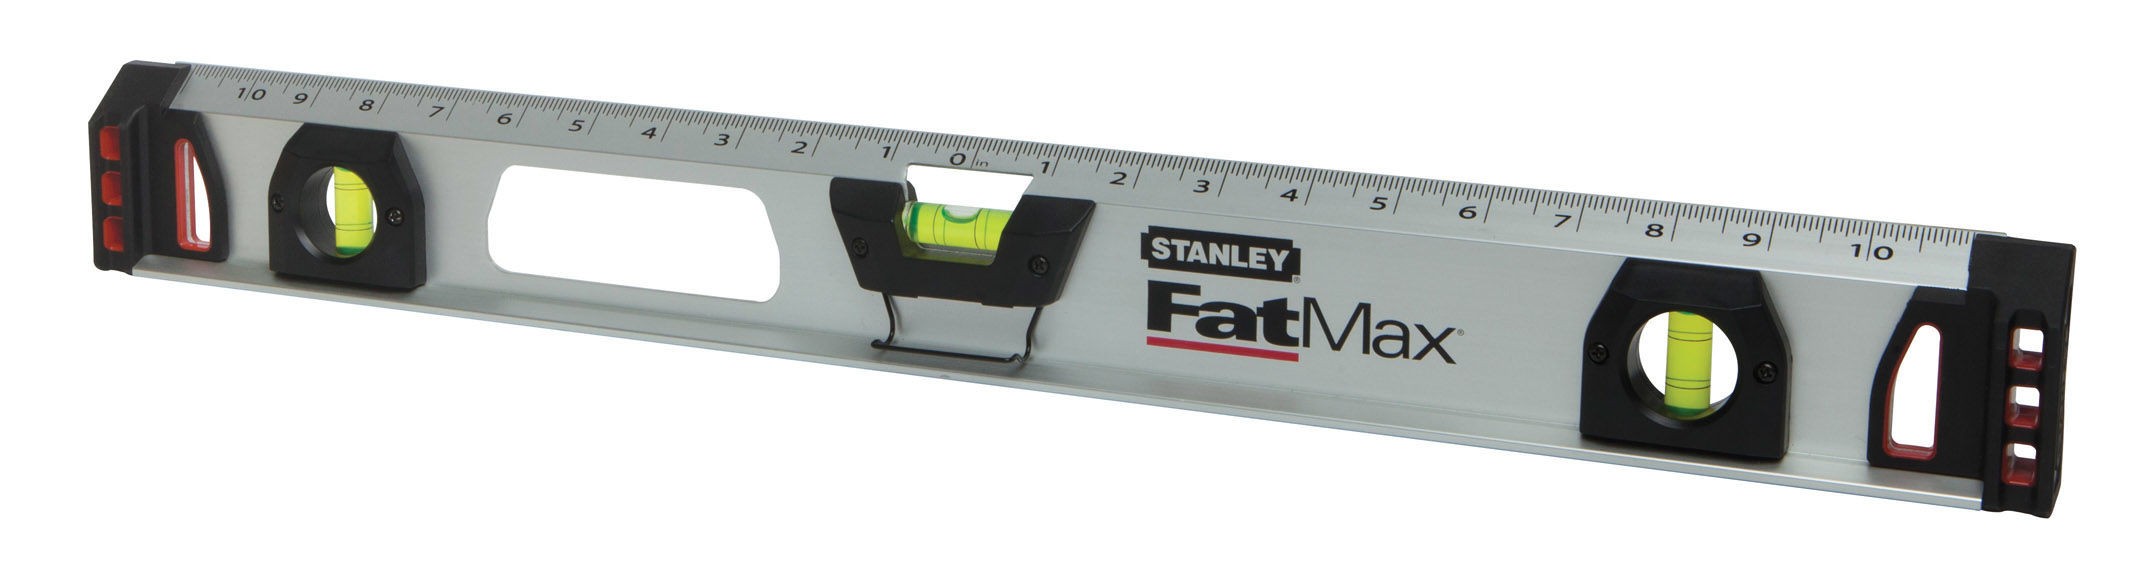 Niveau laser rotatif RL700L (Li-ion) rouge - Fatmax - STANLEY FATMAX  FMHT77447-1